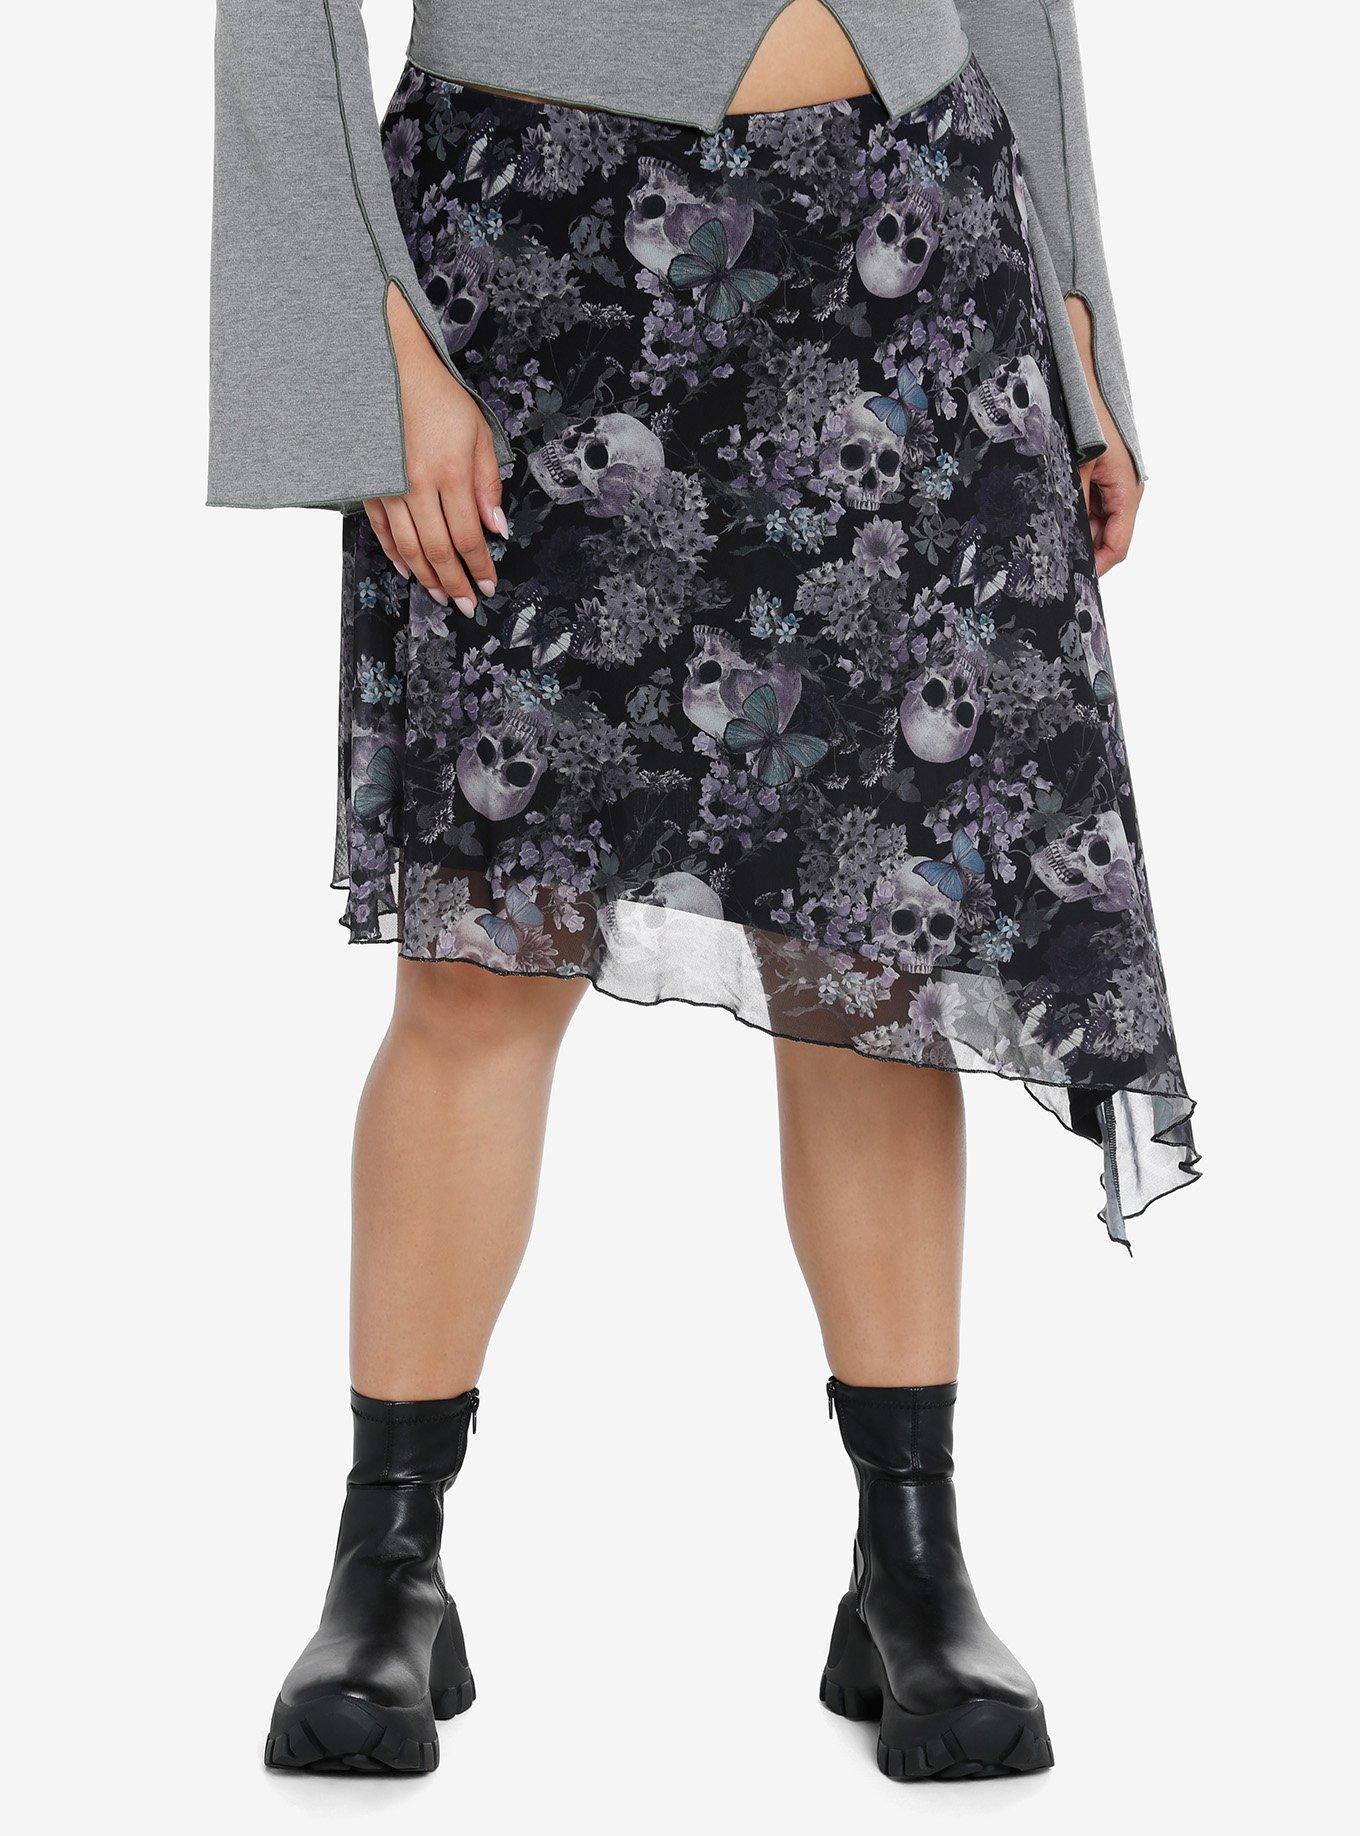 Thorn & Fable Skulls & Flowers Asymmetrical Midi Skirt Plus Size, PURPLE, hi-res